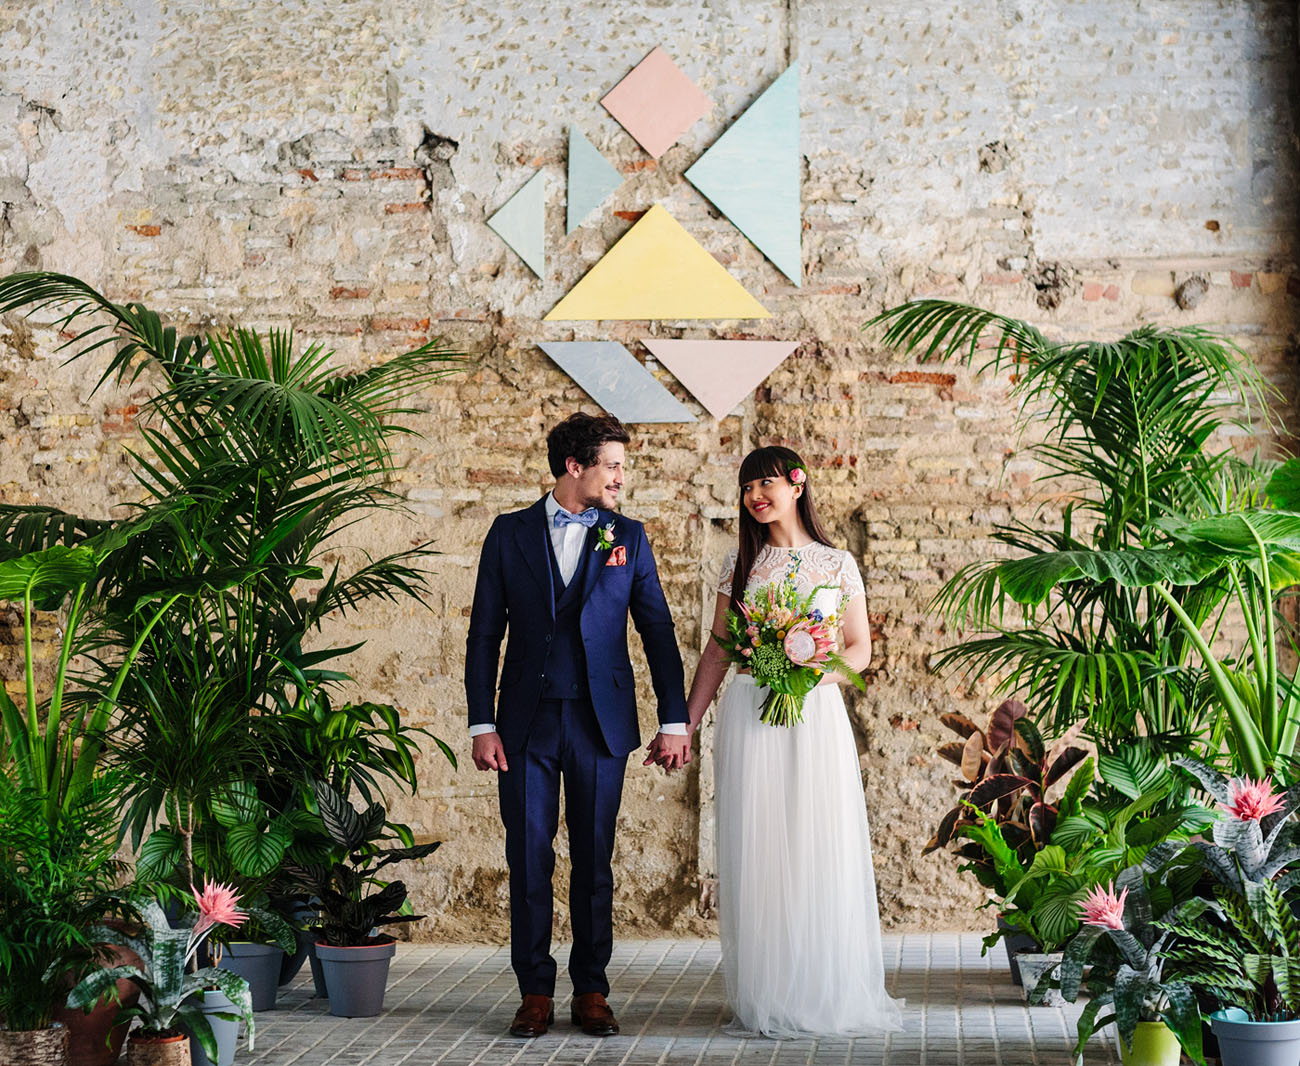 Modern Pastel Wedding Inspiration from Spain